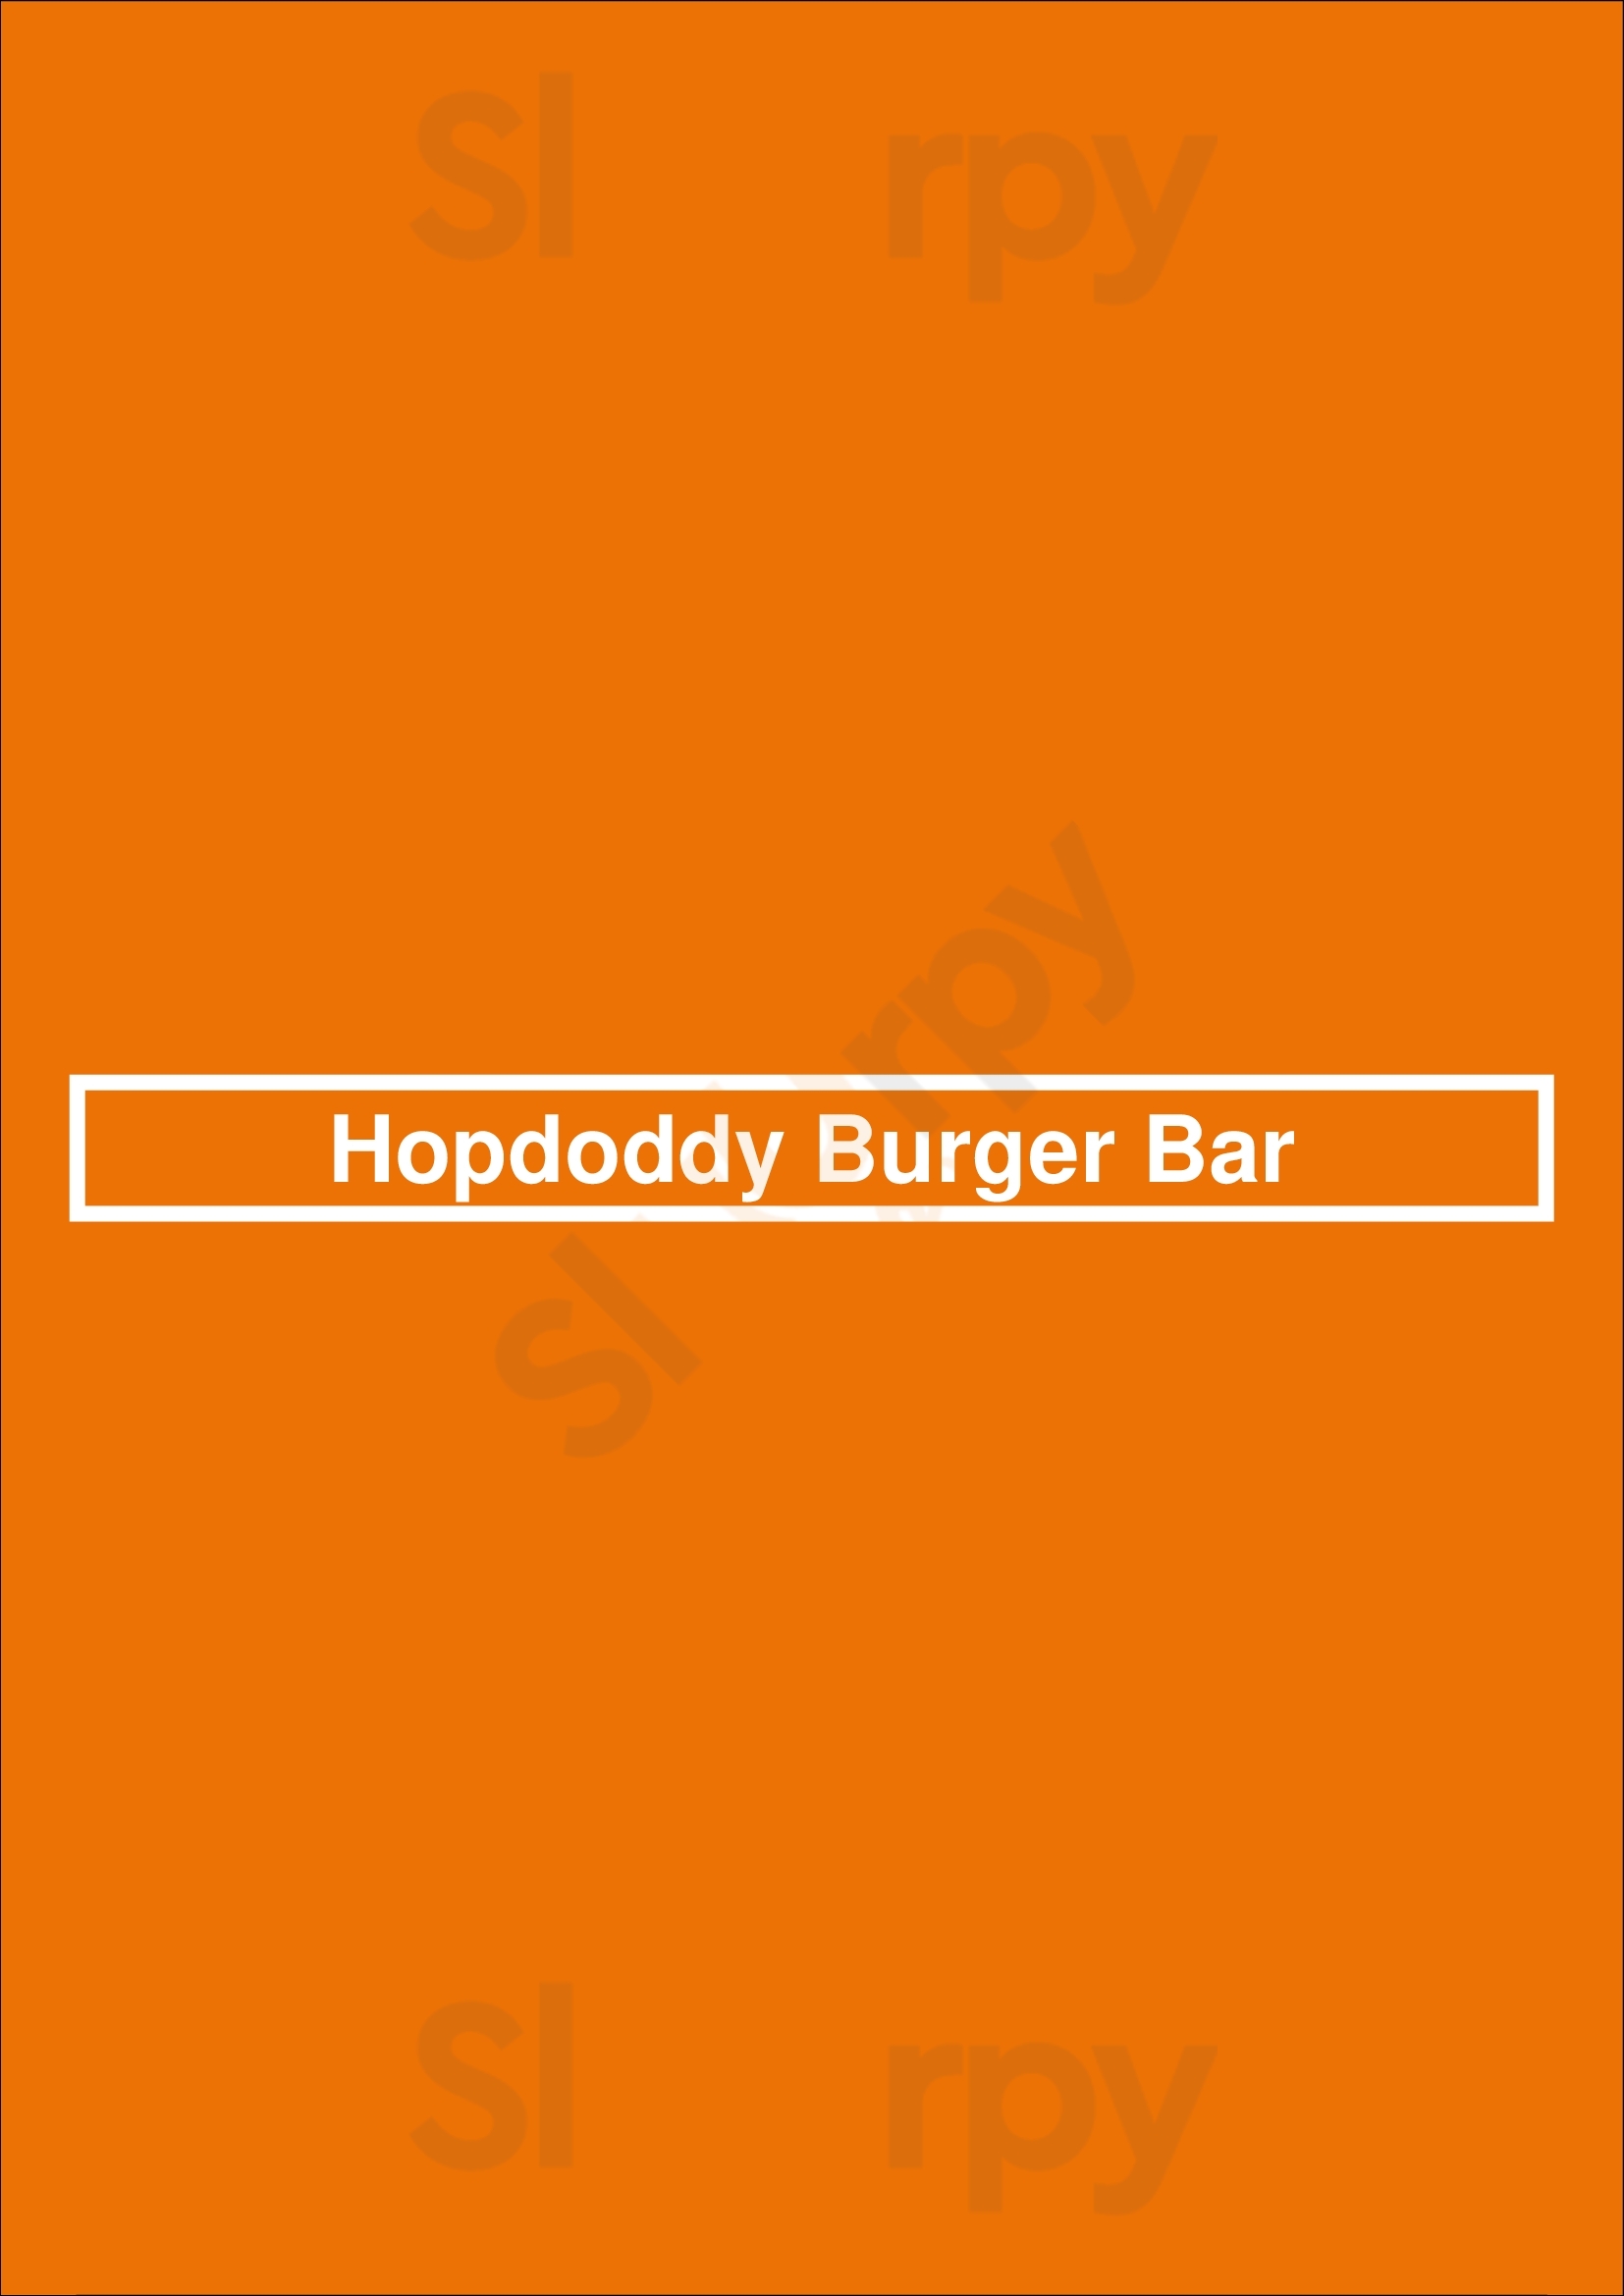 Hopdoddy Burger Bar Scottsdale Menu - 1